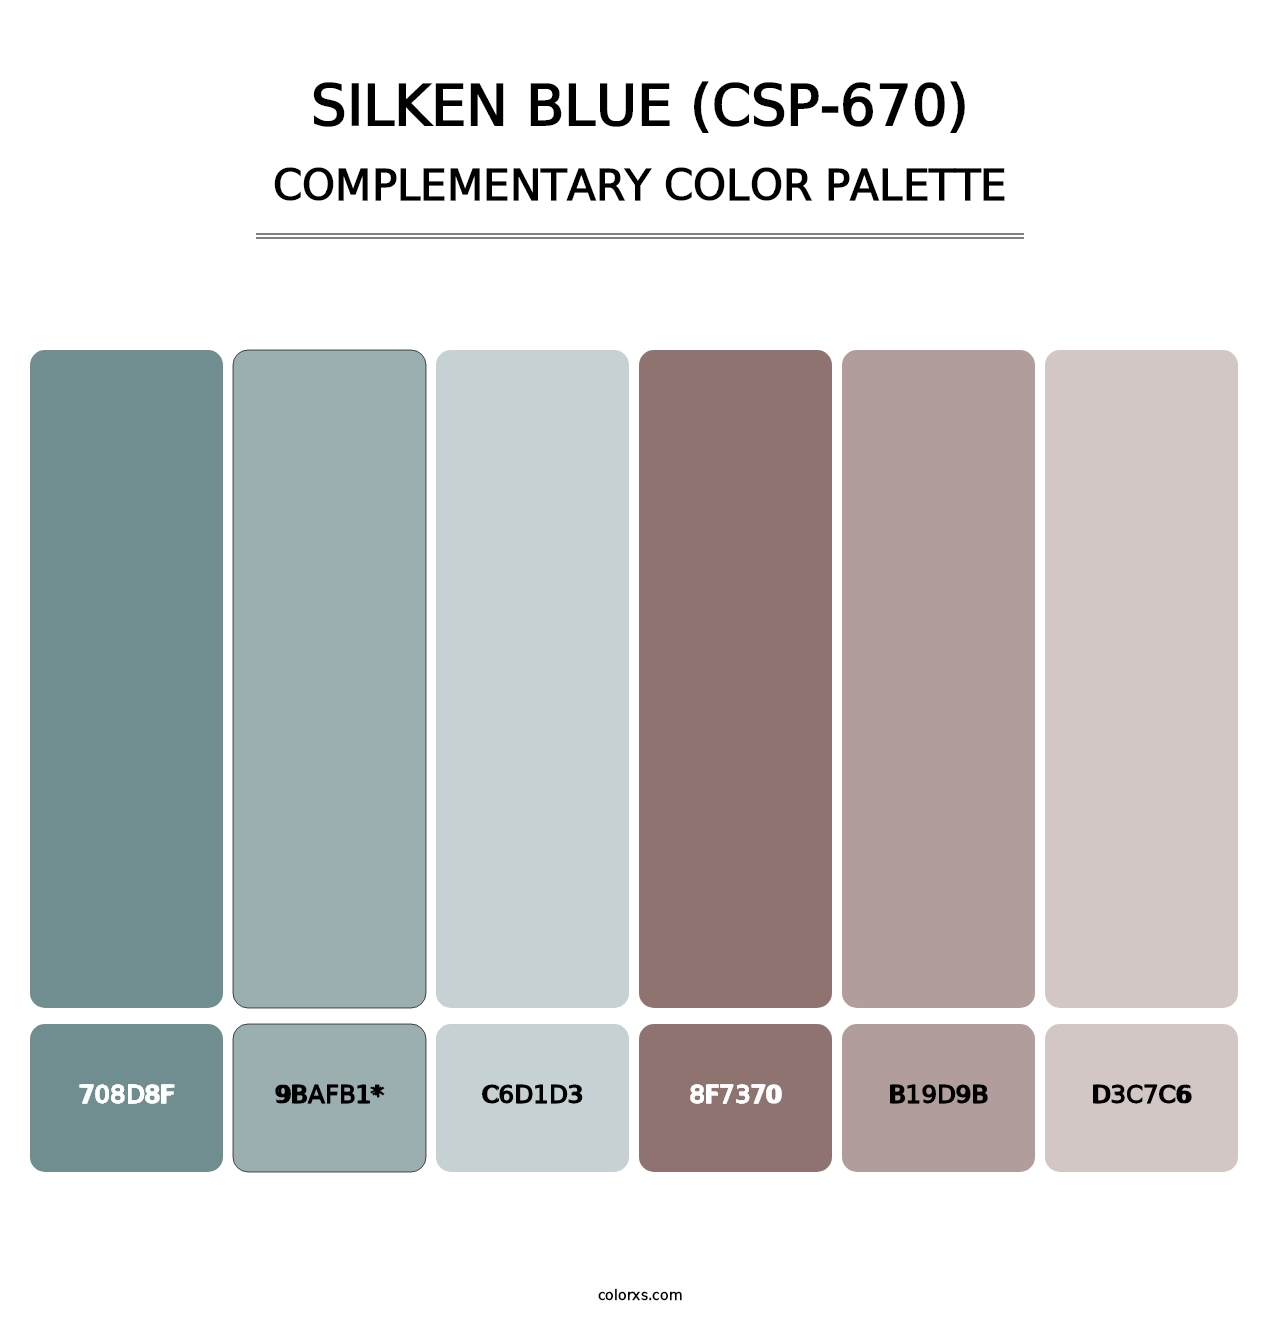 Silken Blue (CSP-670) - Complementary Color Palette